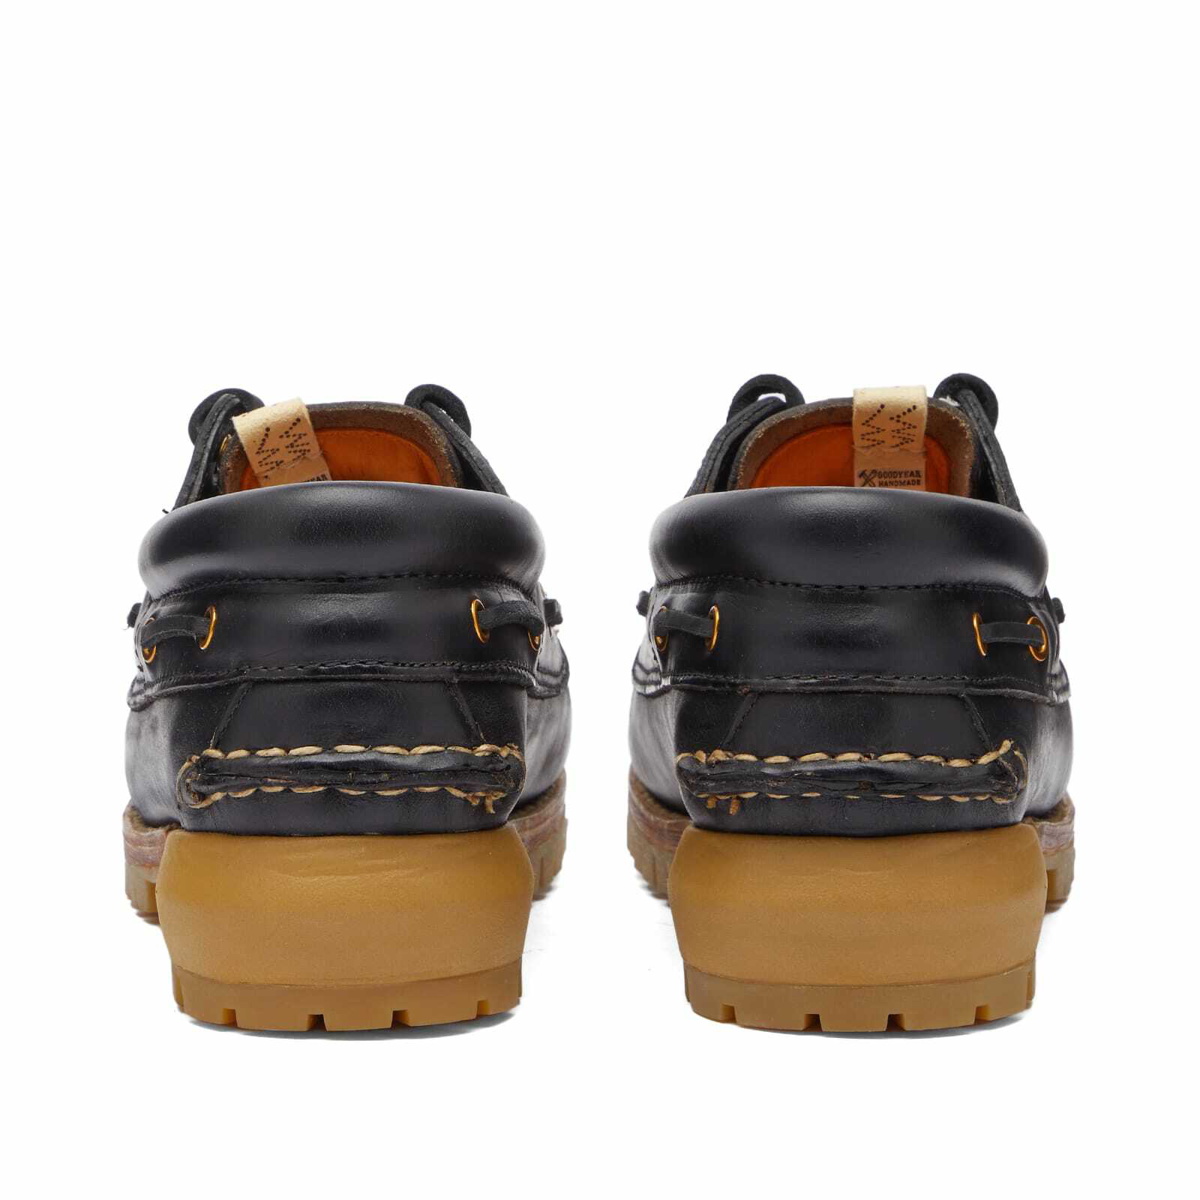 Visvim Men's Vivism Wallace Folk Deck Shoe in Black Visvim